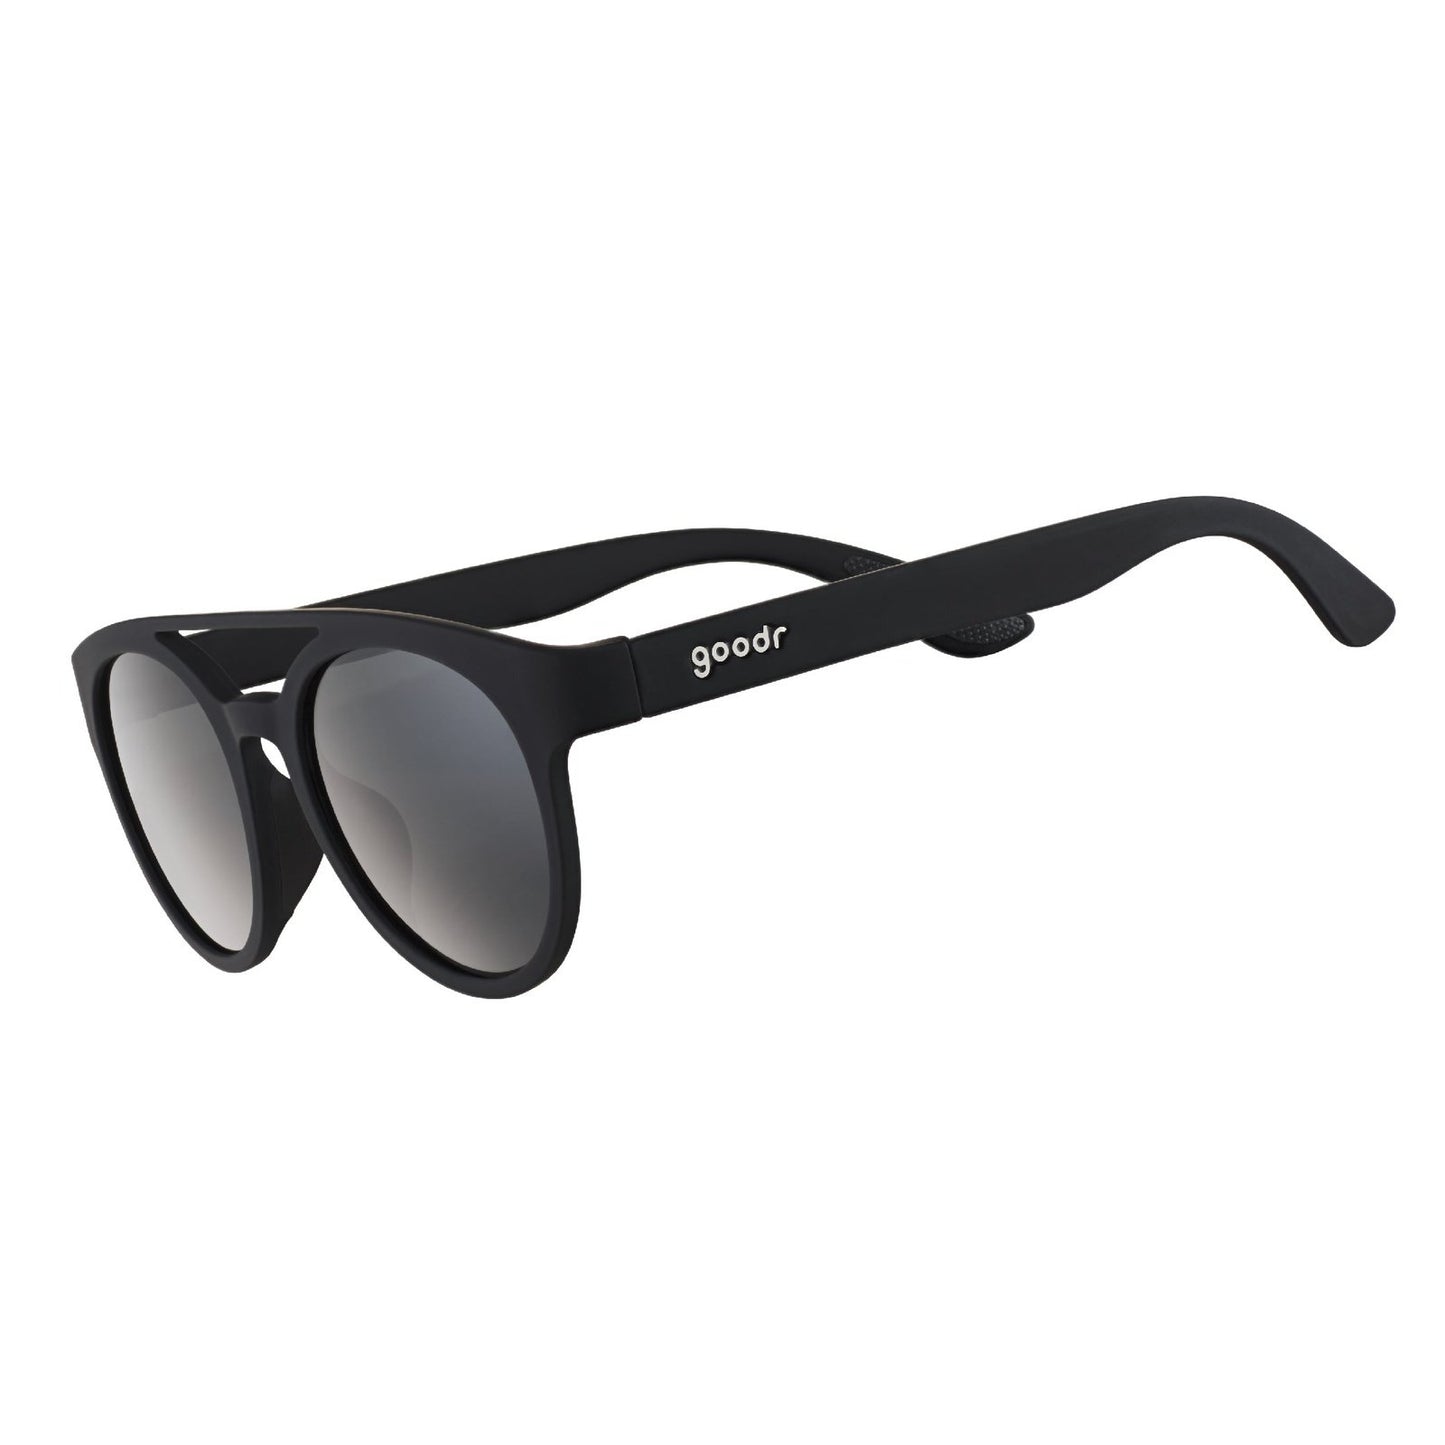 "Professor 00G” PHG Polarized Sunglasses Goodr